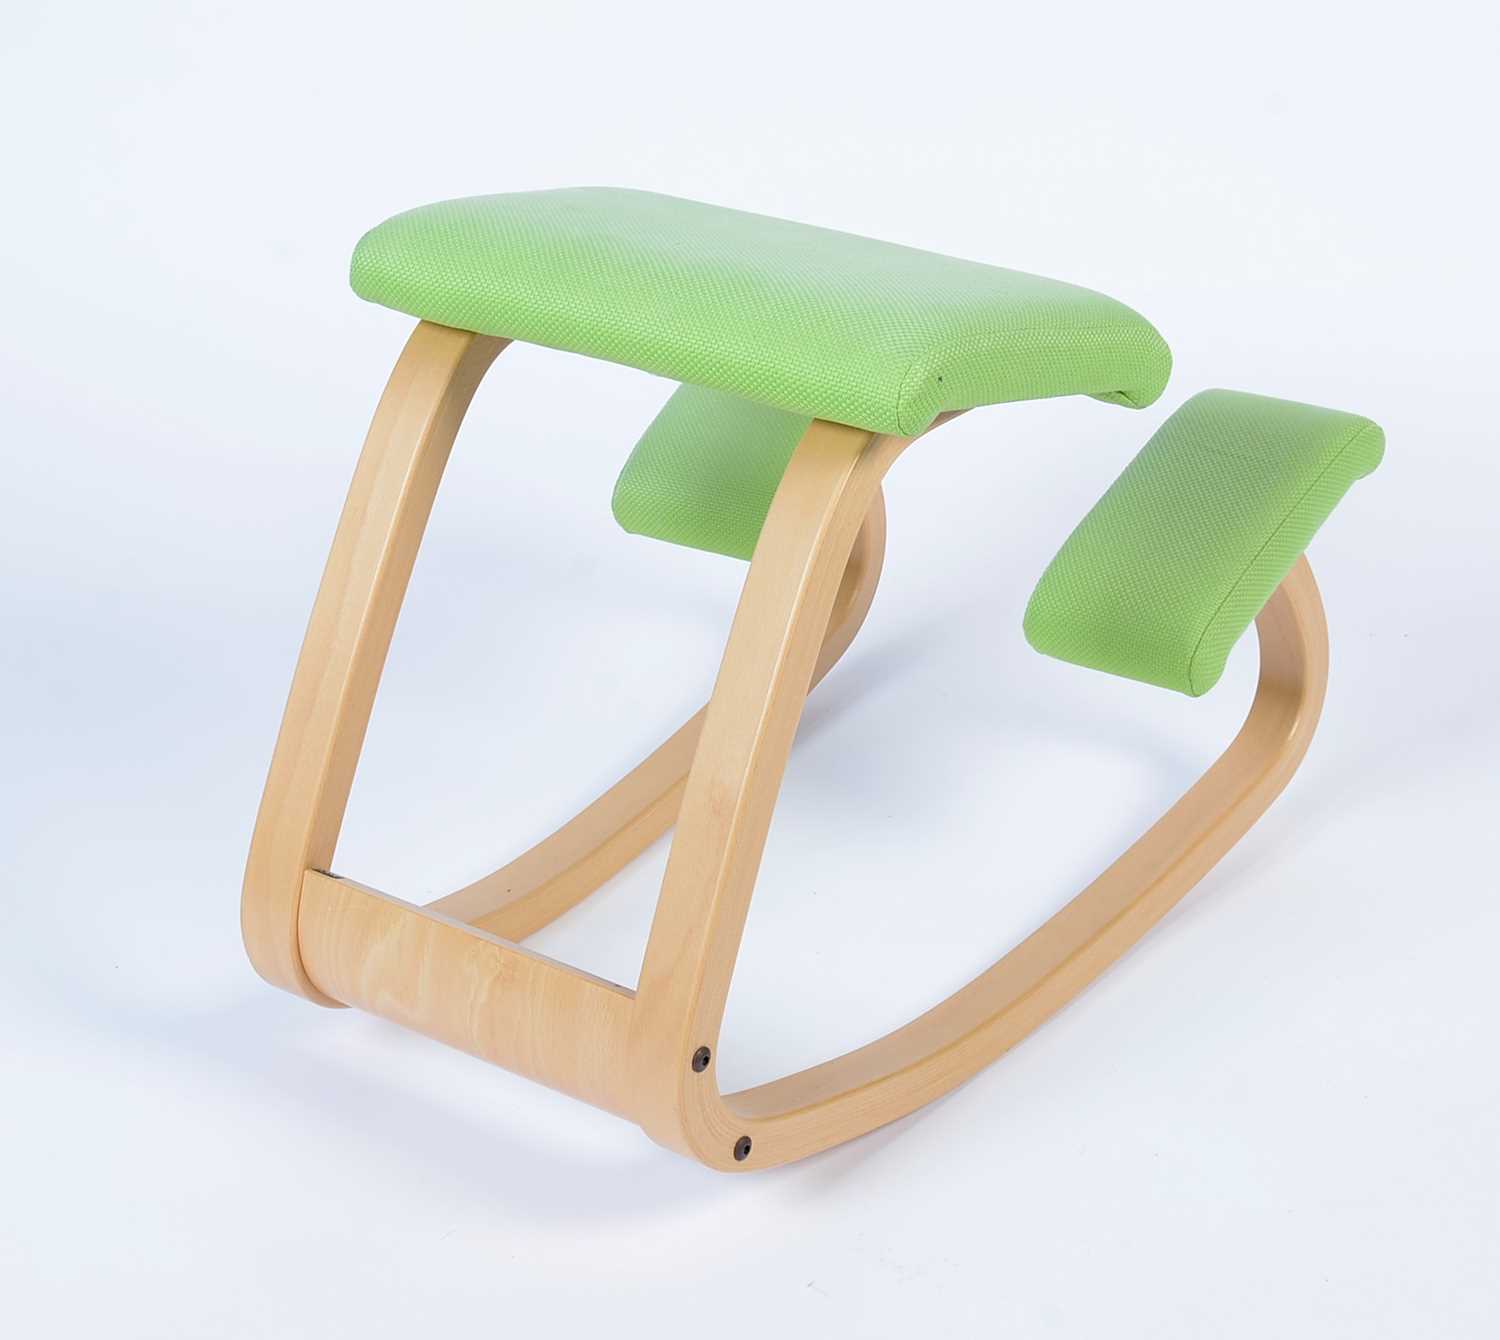 Stokke after a design by Peter Opsvik: a bent plywood rocking/kneeling chair. - Image 2 of 7